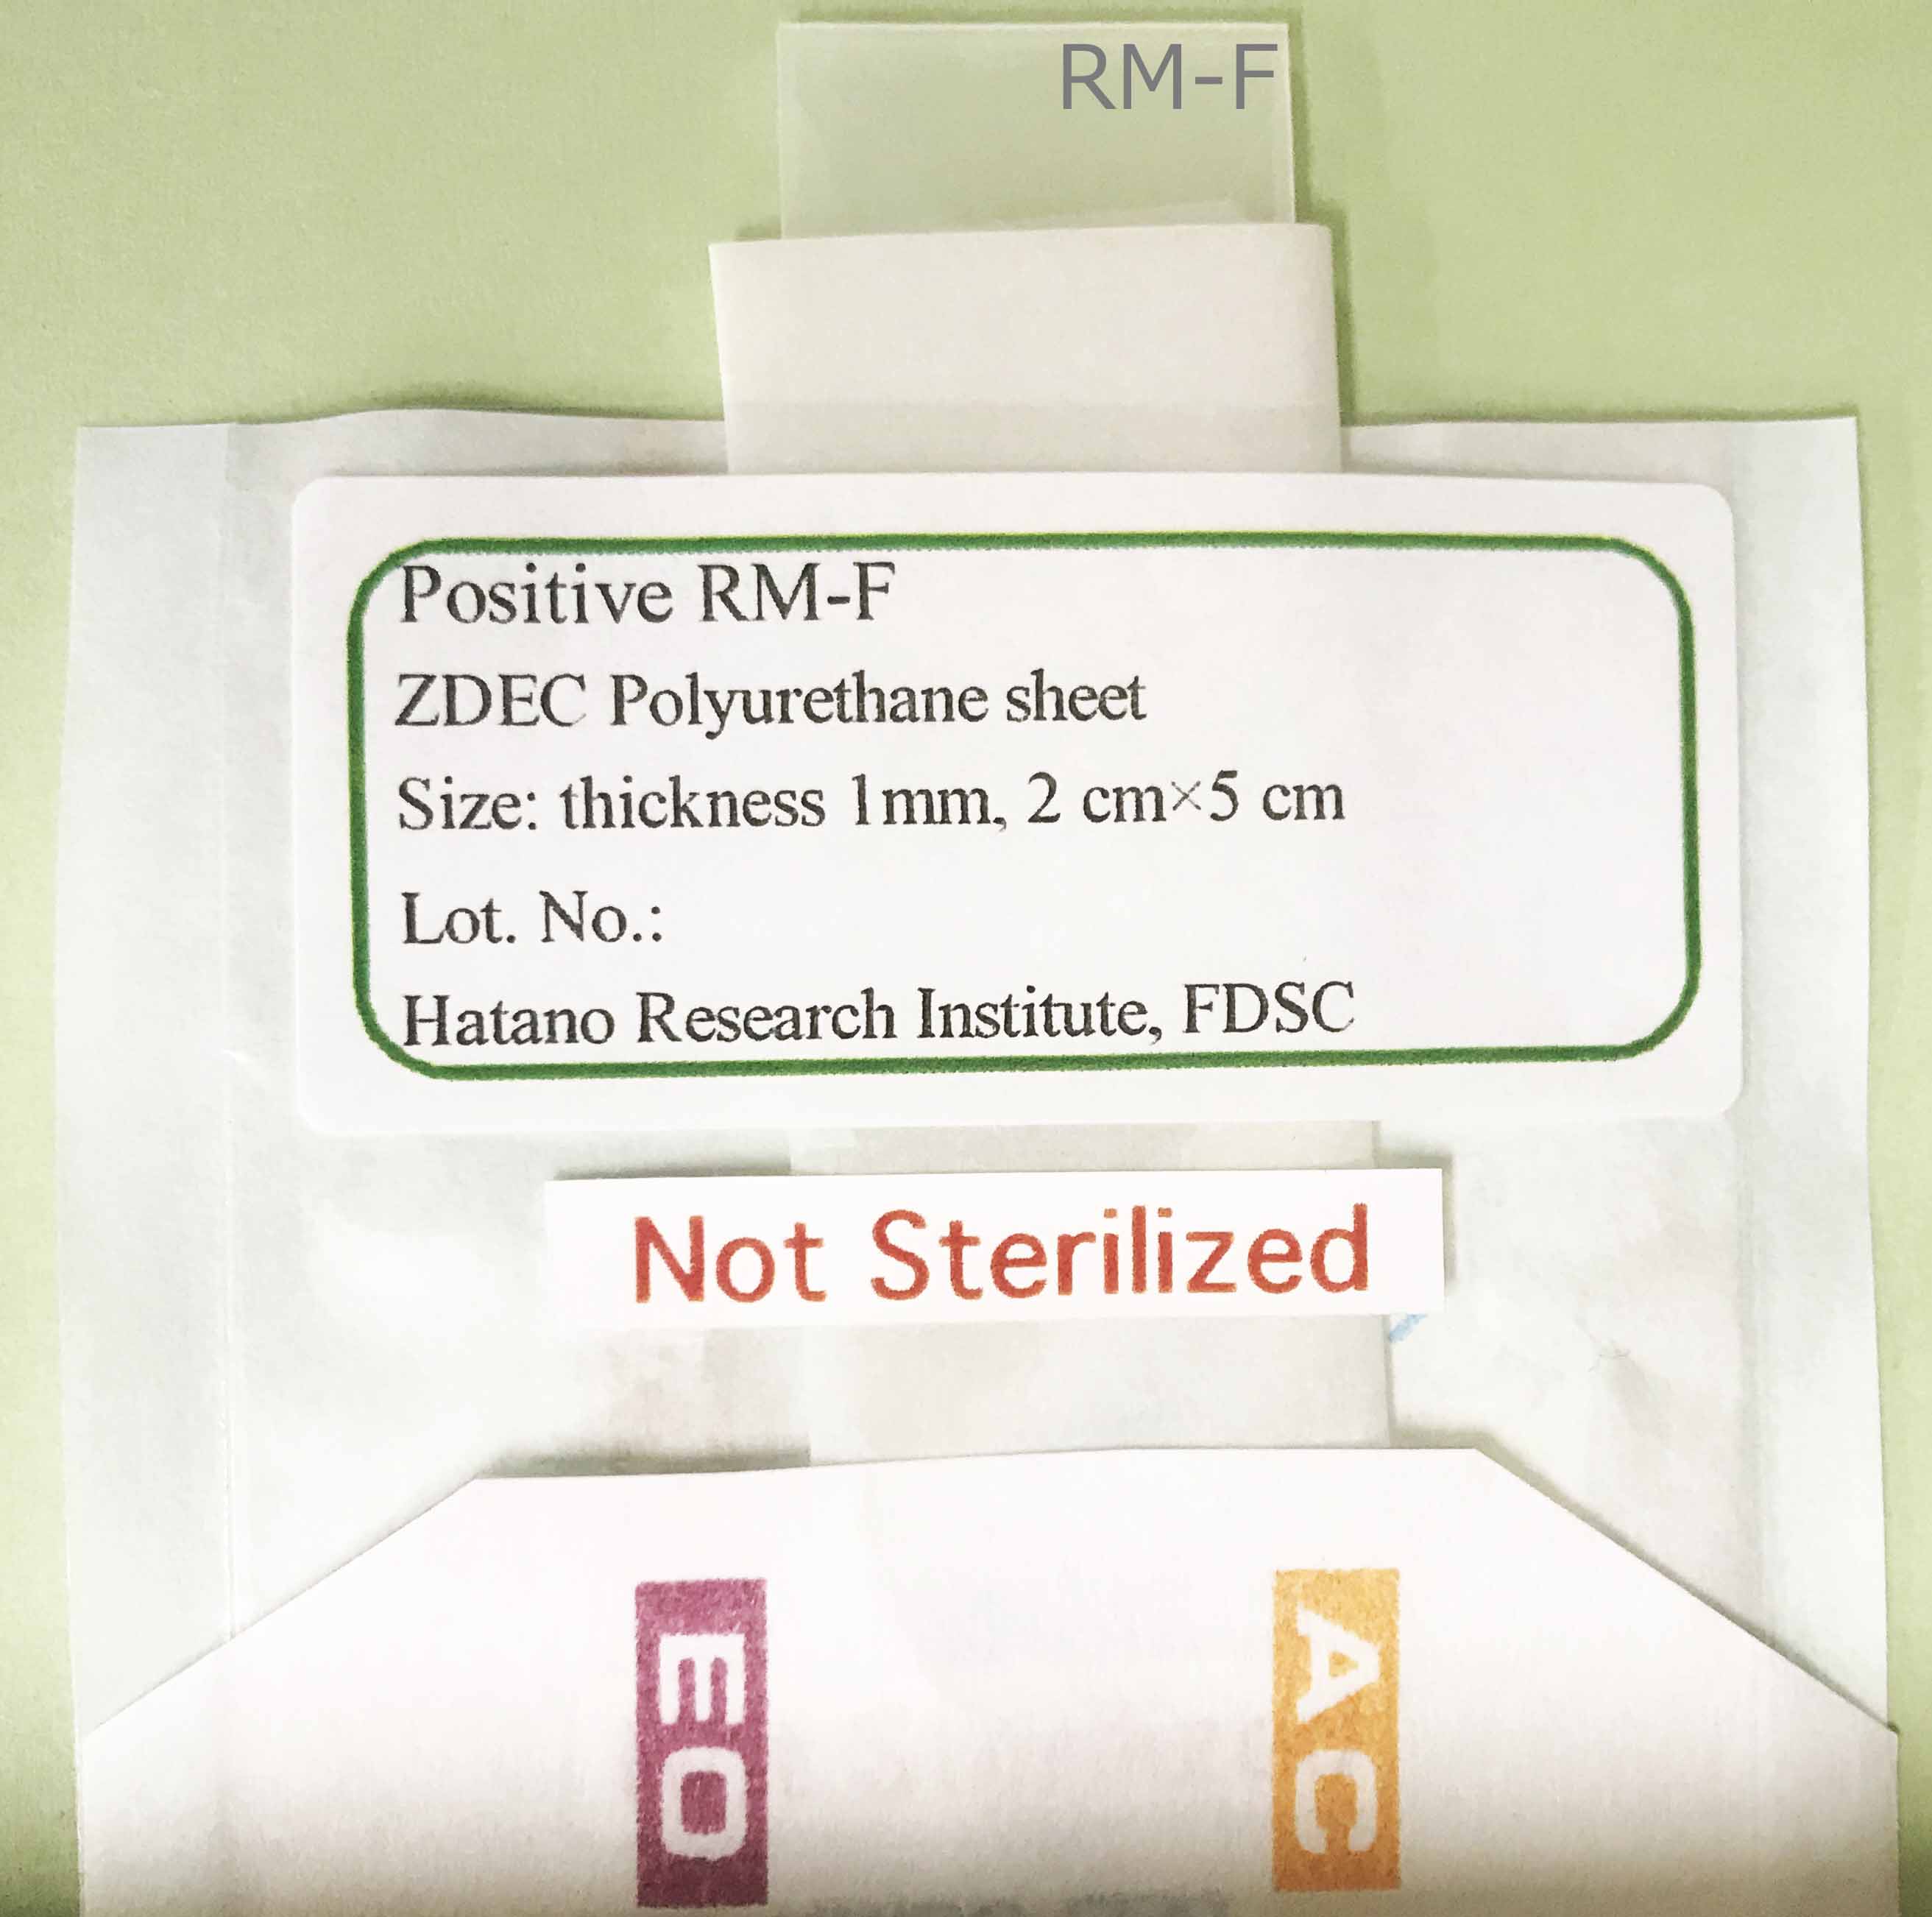 [FDSC]阳性RM-F（sheet），植入试验（仅用于短期试验 ），ZDEC